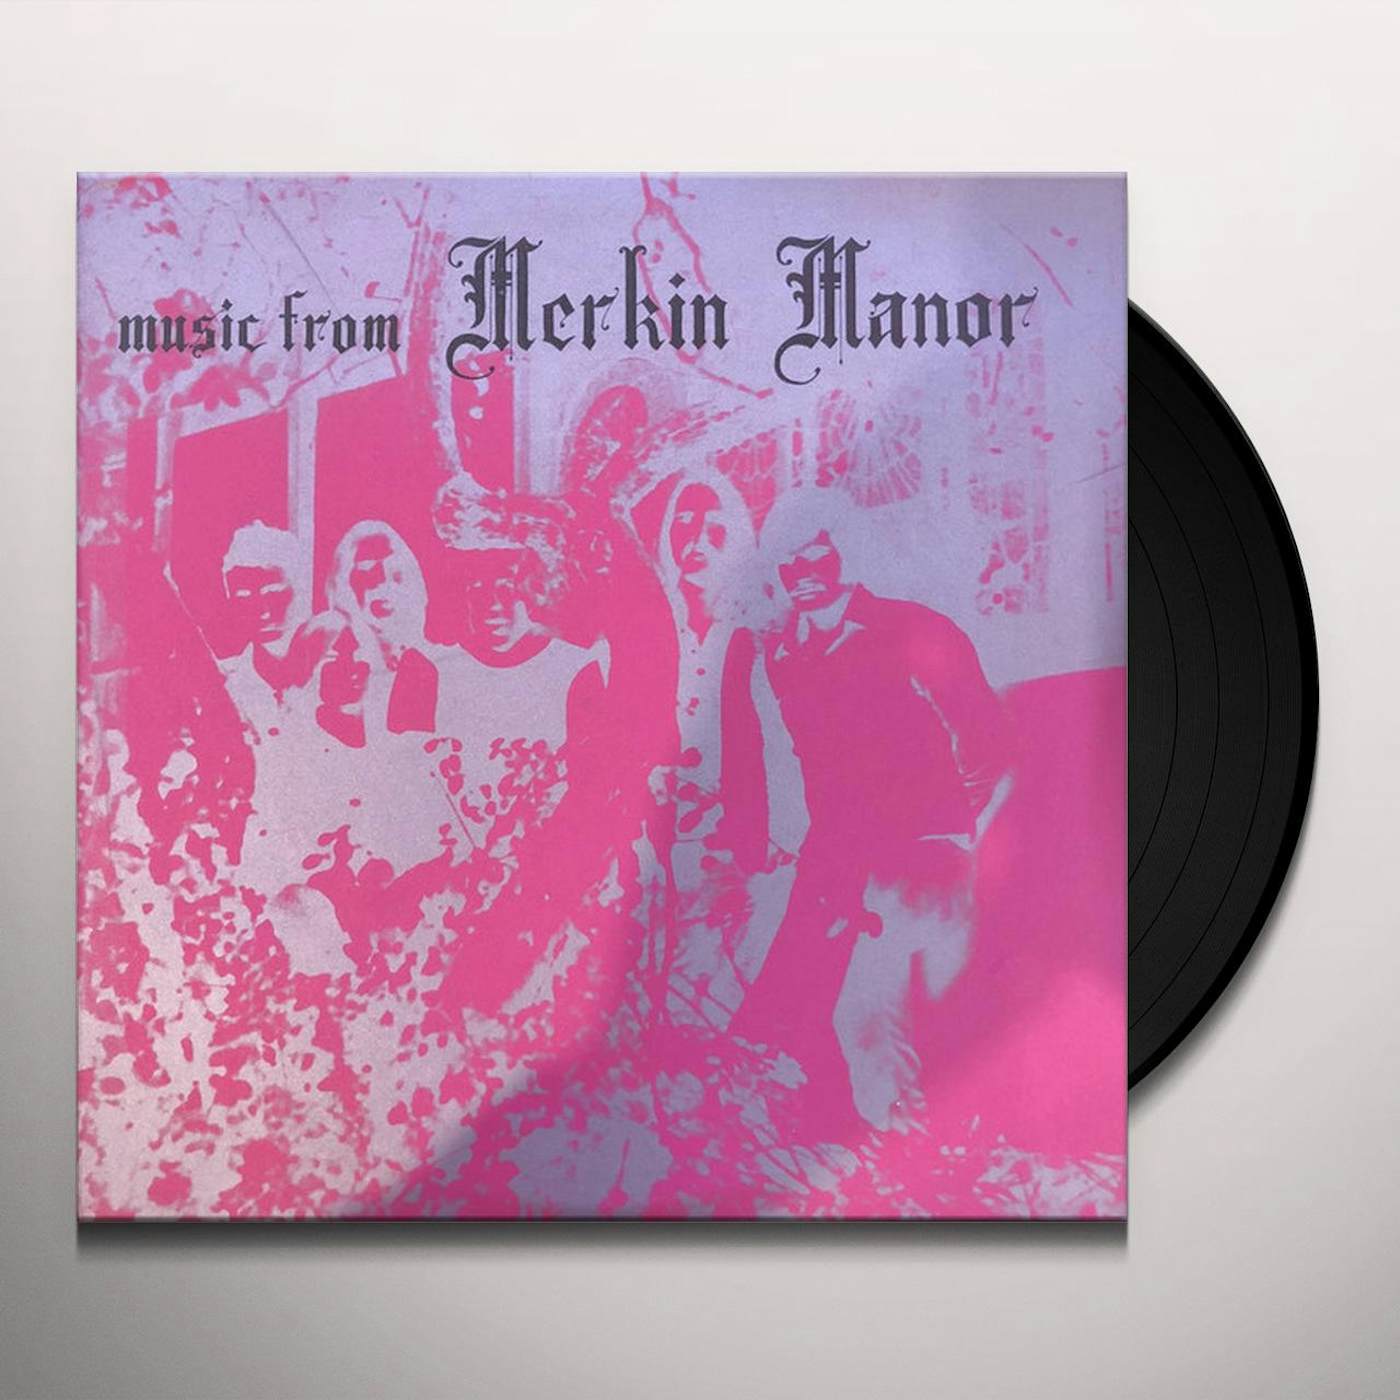 Music From Merkin Manor Vinyl Record